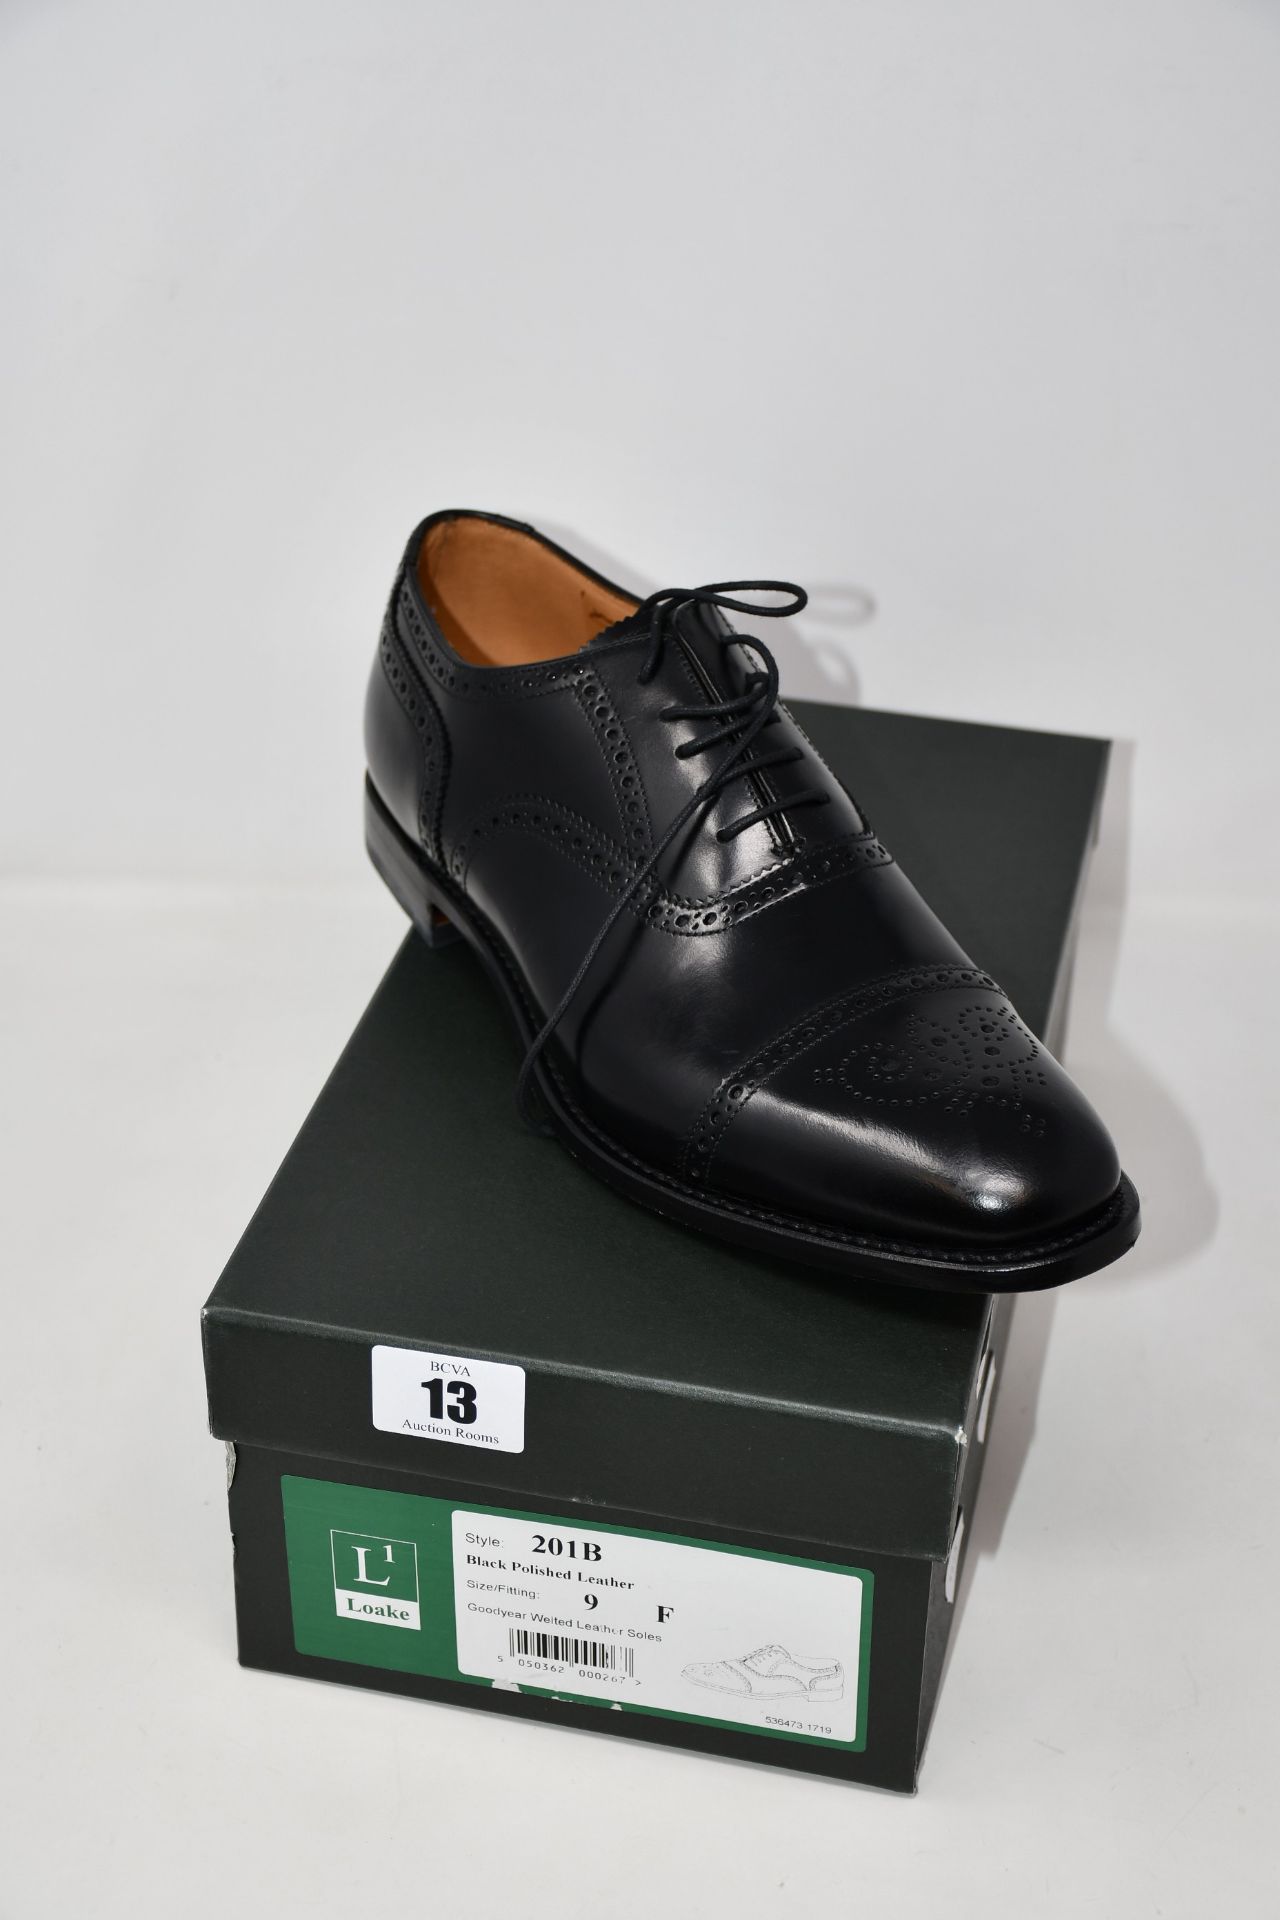 A pair of men's as new Loake 201B Semi-brogue shoes (UK 9.5F).